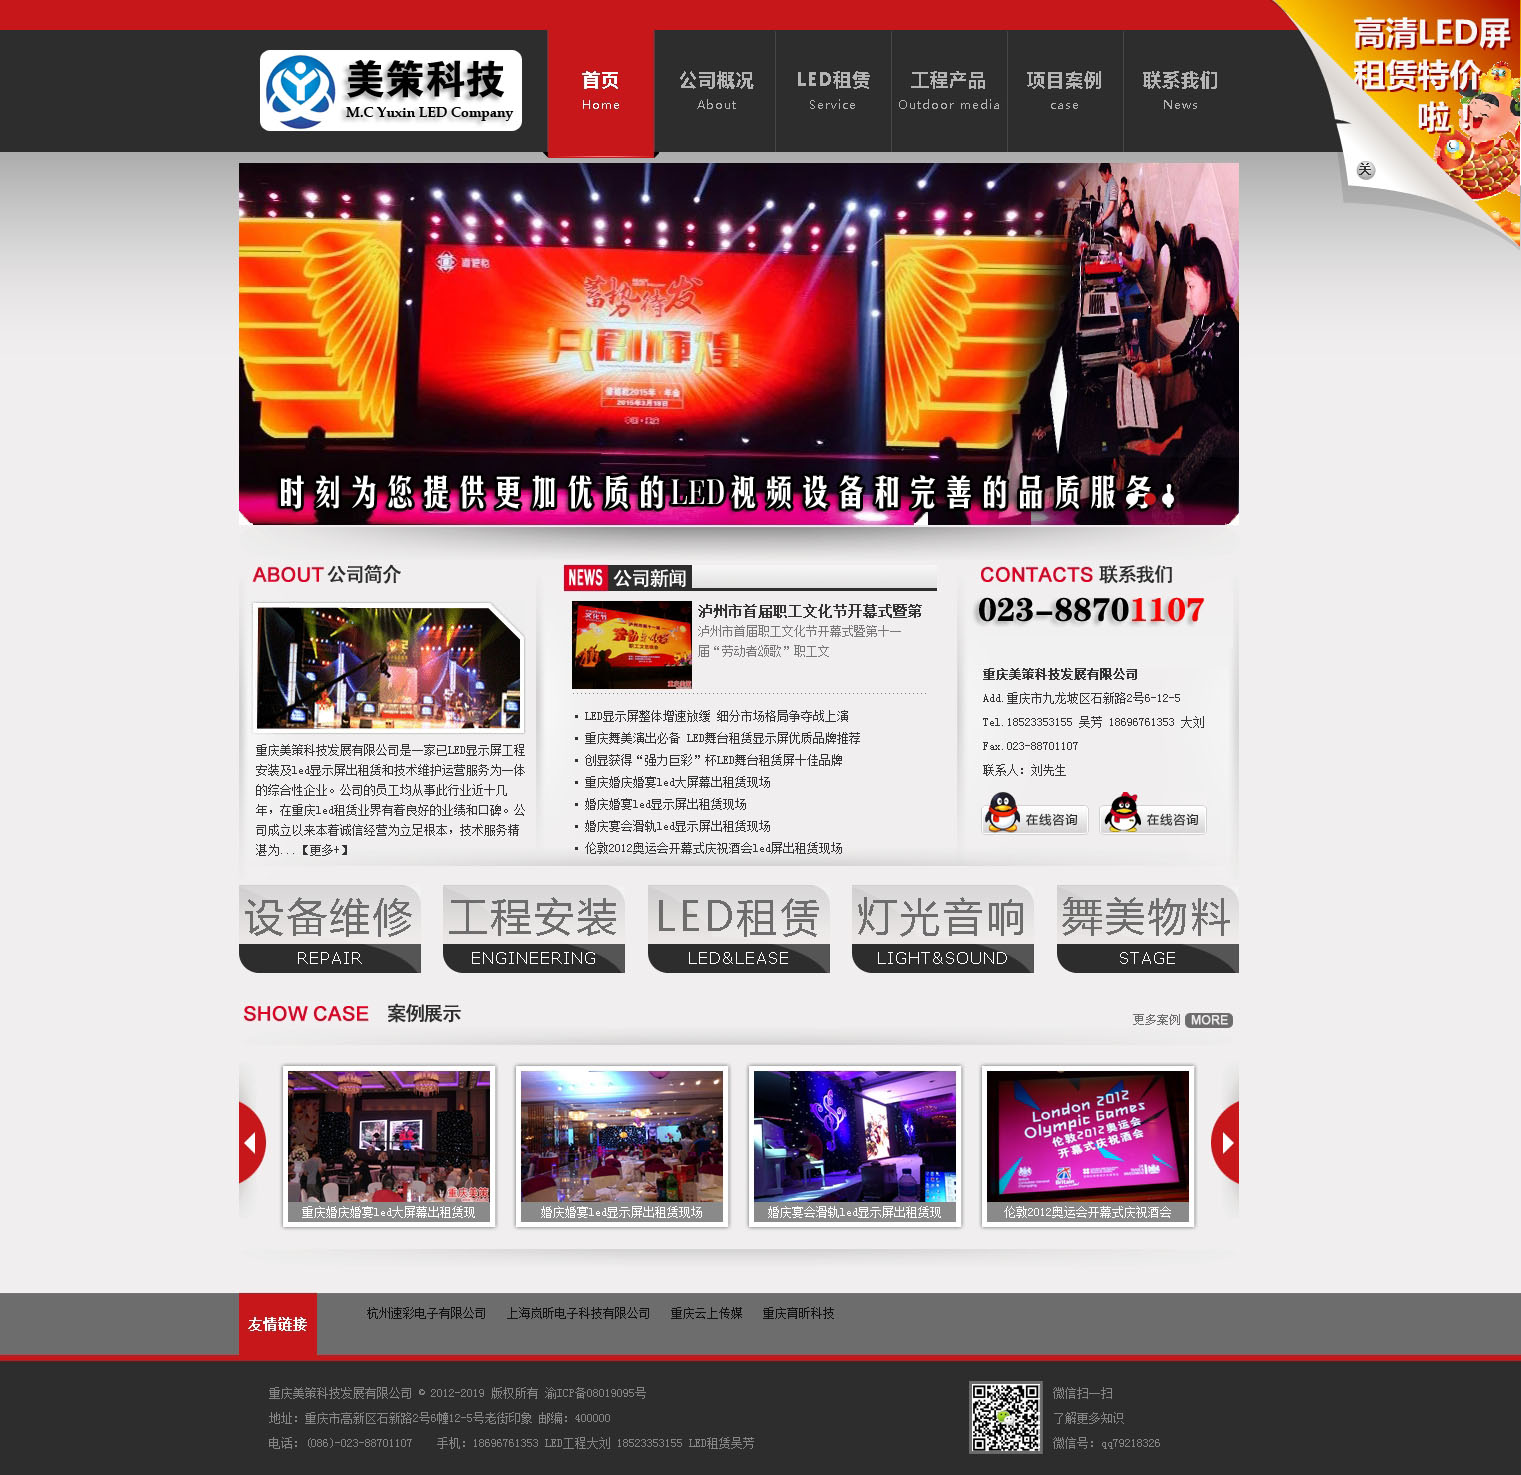 Empire CMS imitates a media company's corporate website template